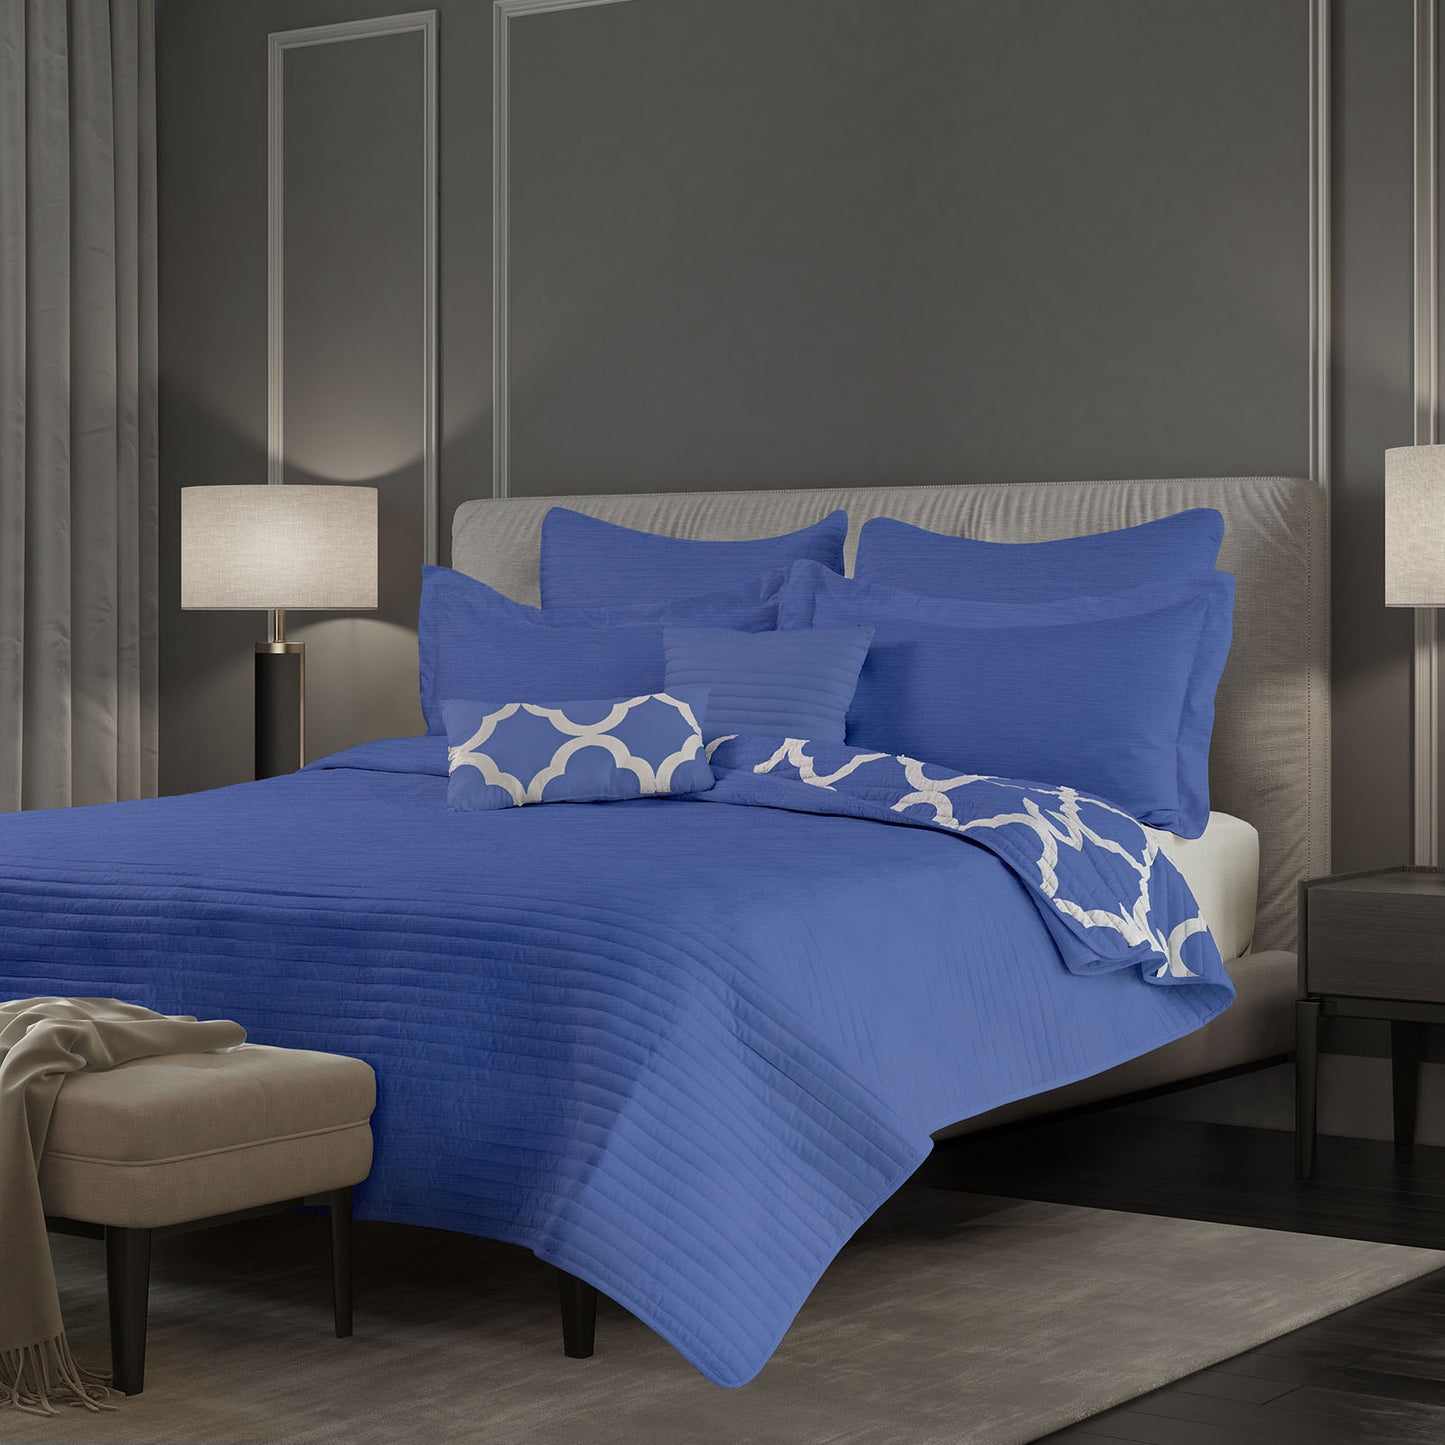 Royal Comfort Bamboo Cooling Reversible 7 Piece Comforter Set Bedspread - King - Royal Blue - BM House & Garden